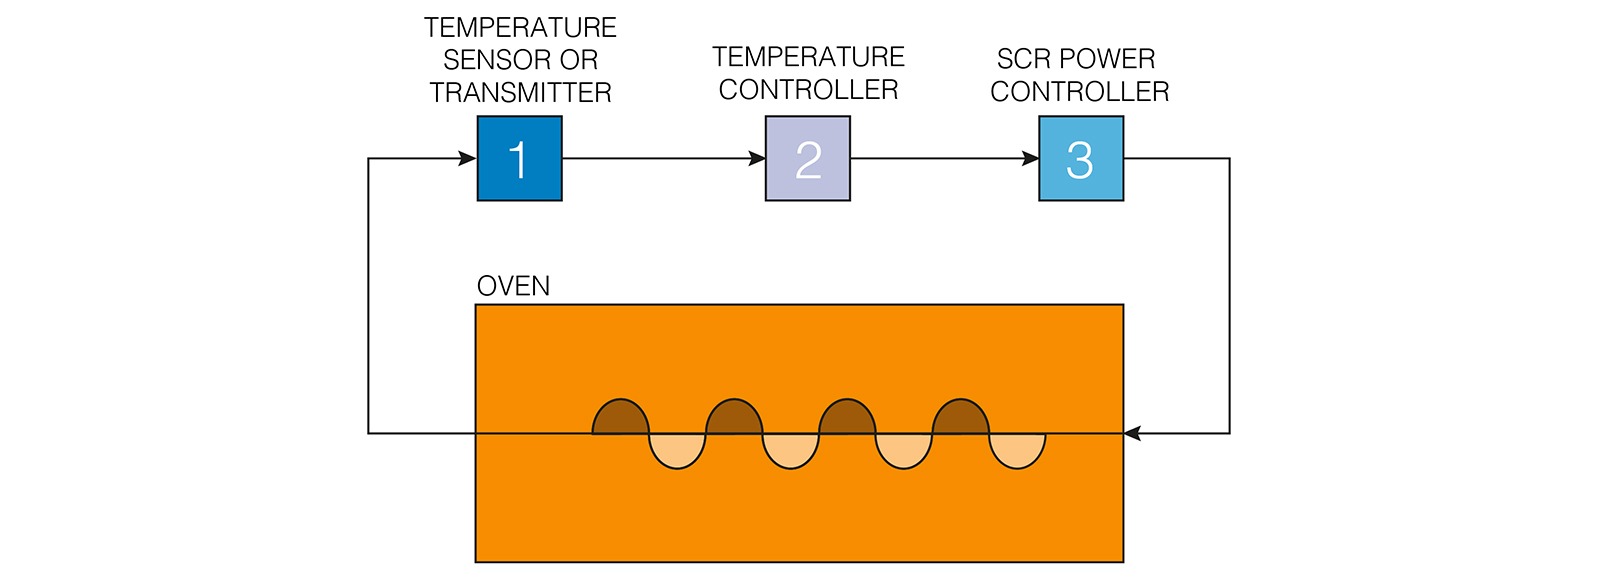 versatile performance in industrial heating applications